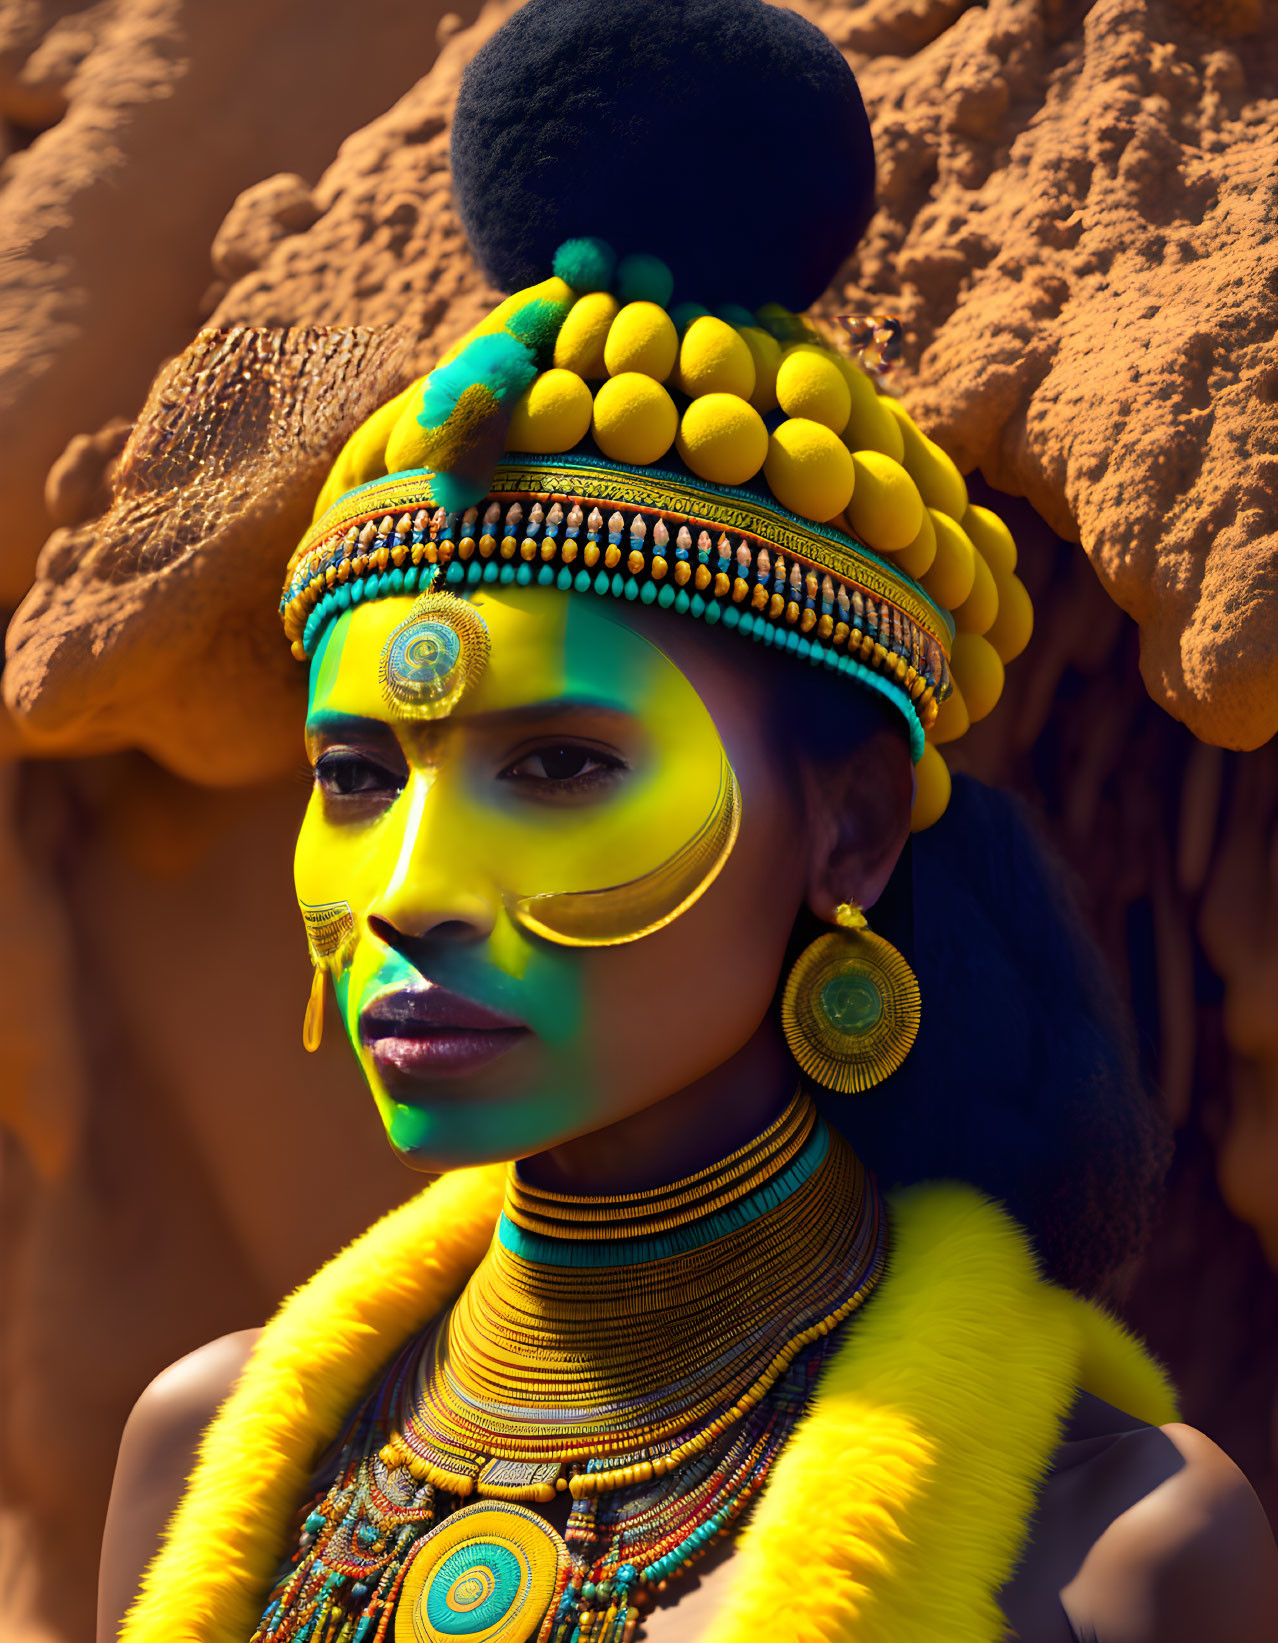 mayan Yellow Self-Existing Human